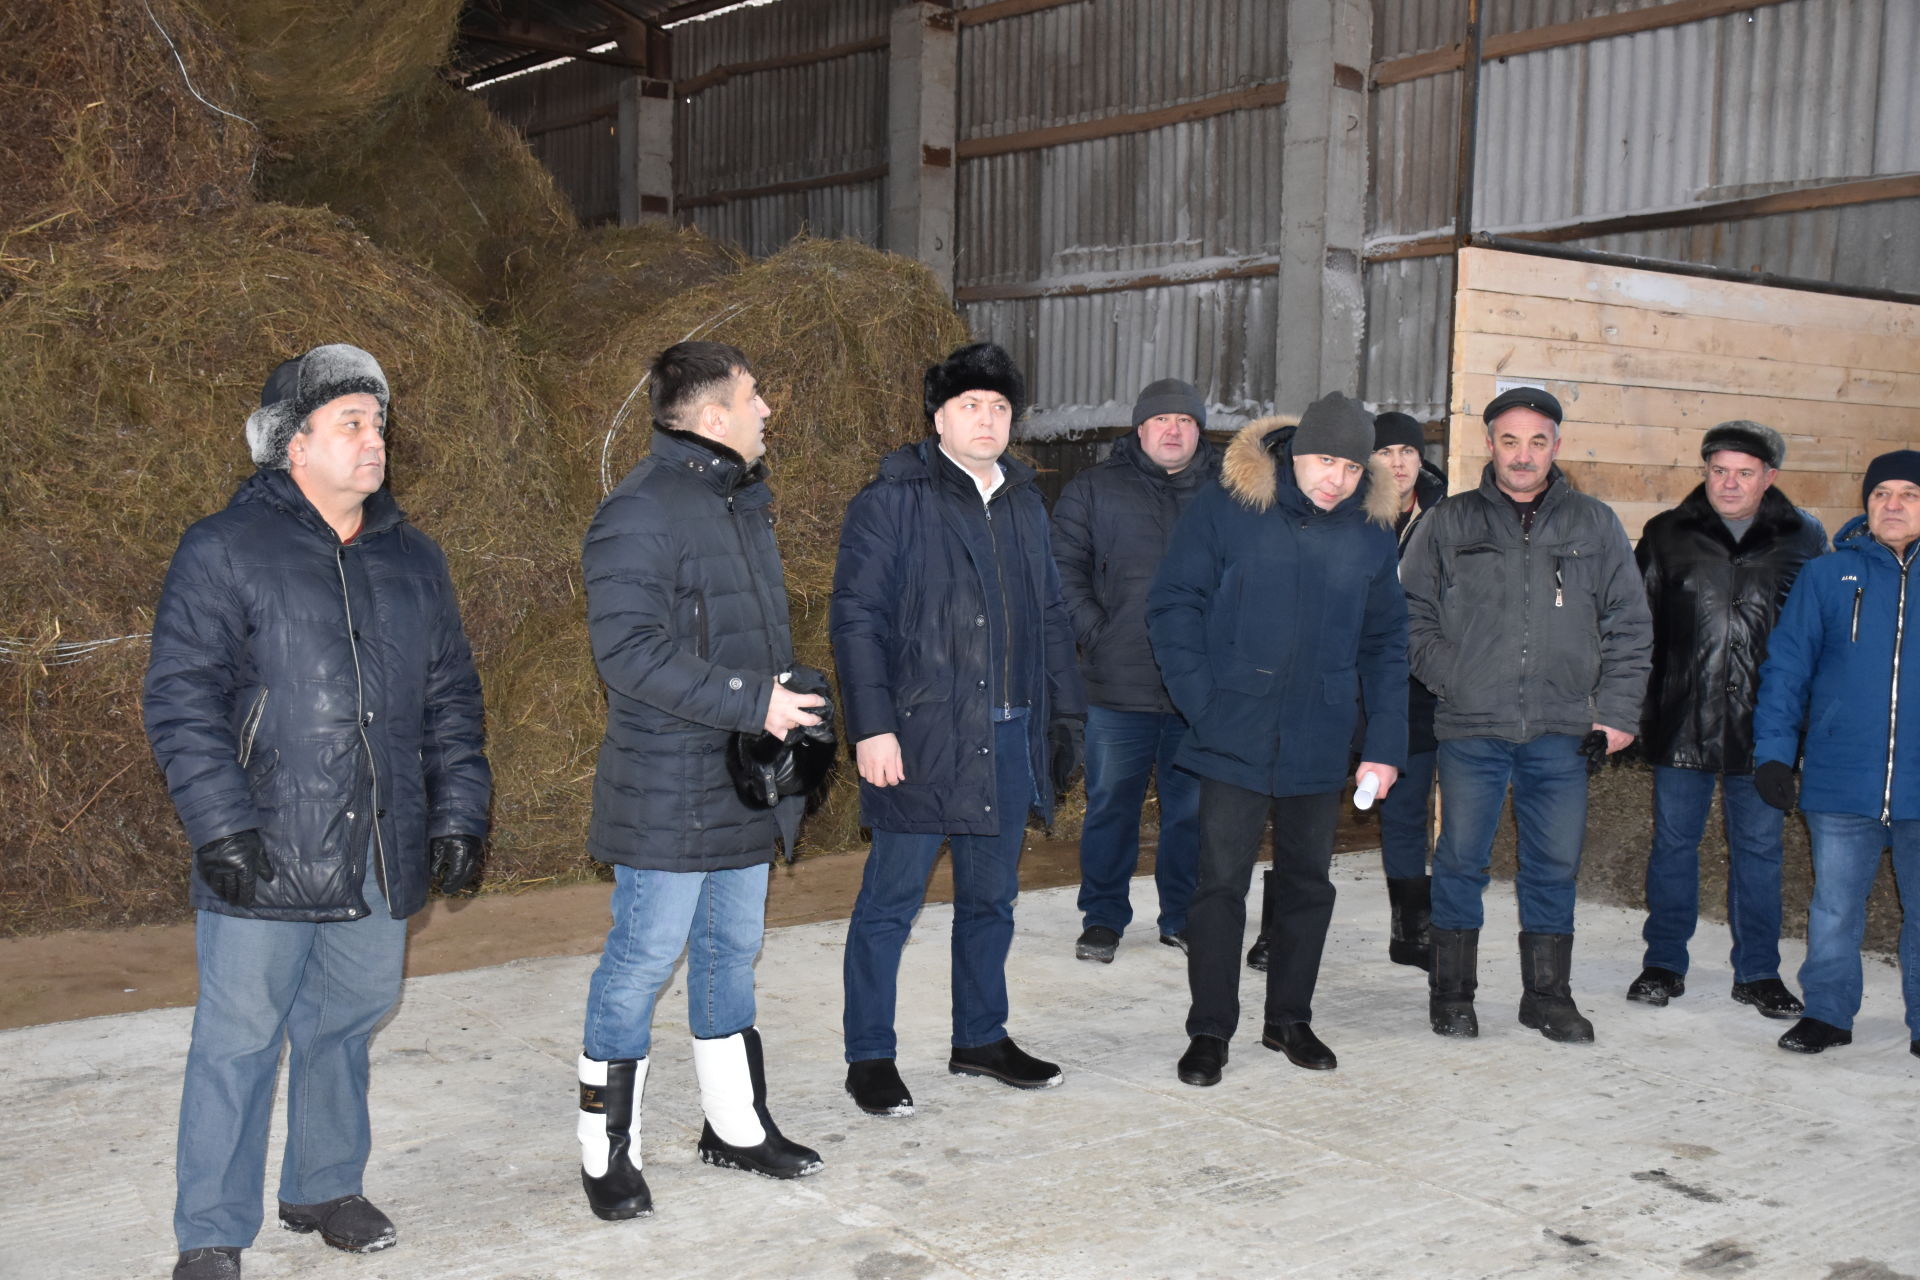 Данил Һадиев исемендәге крестьян-фермер хуҗалыгында бүгенге көндә тәүлеклек тулаем савым 11 тоннаны тәшкил итә